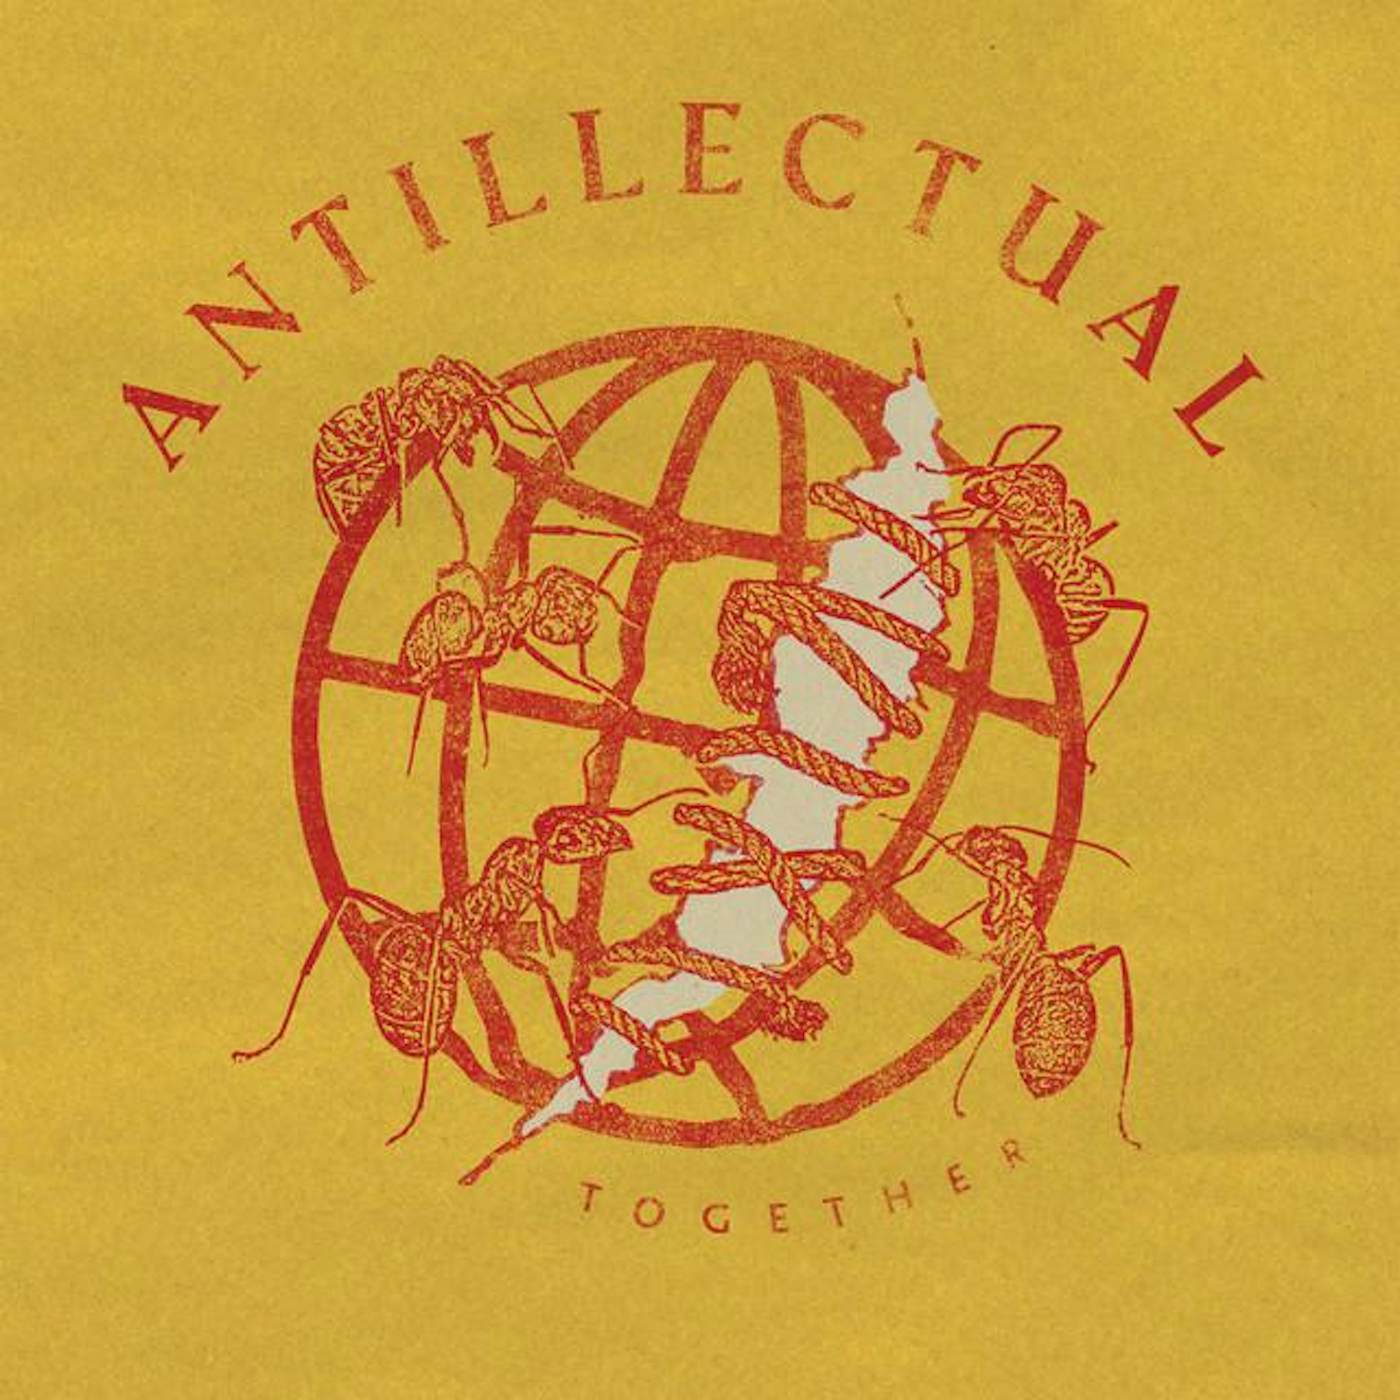 Antillectual